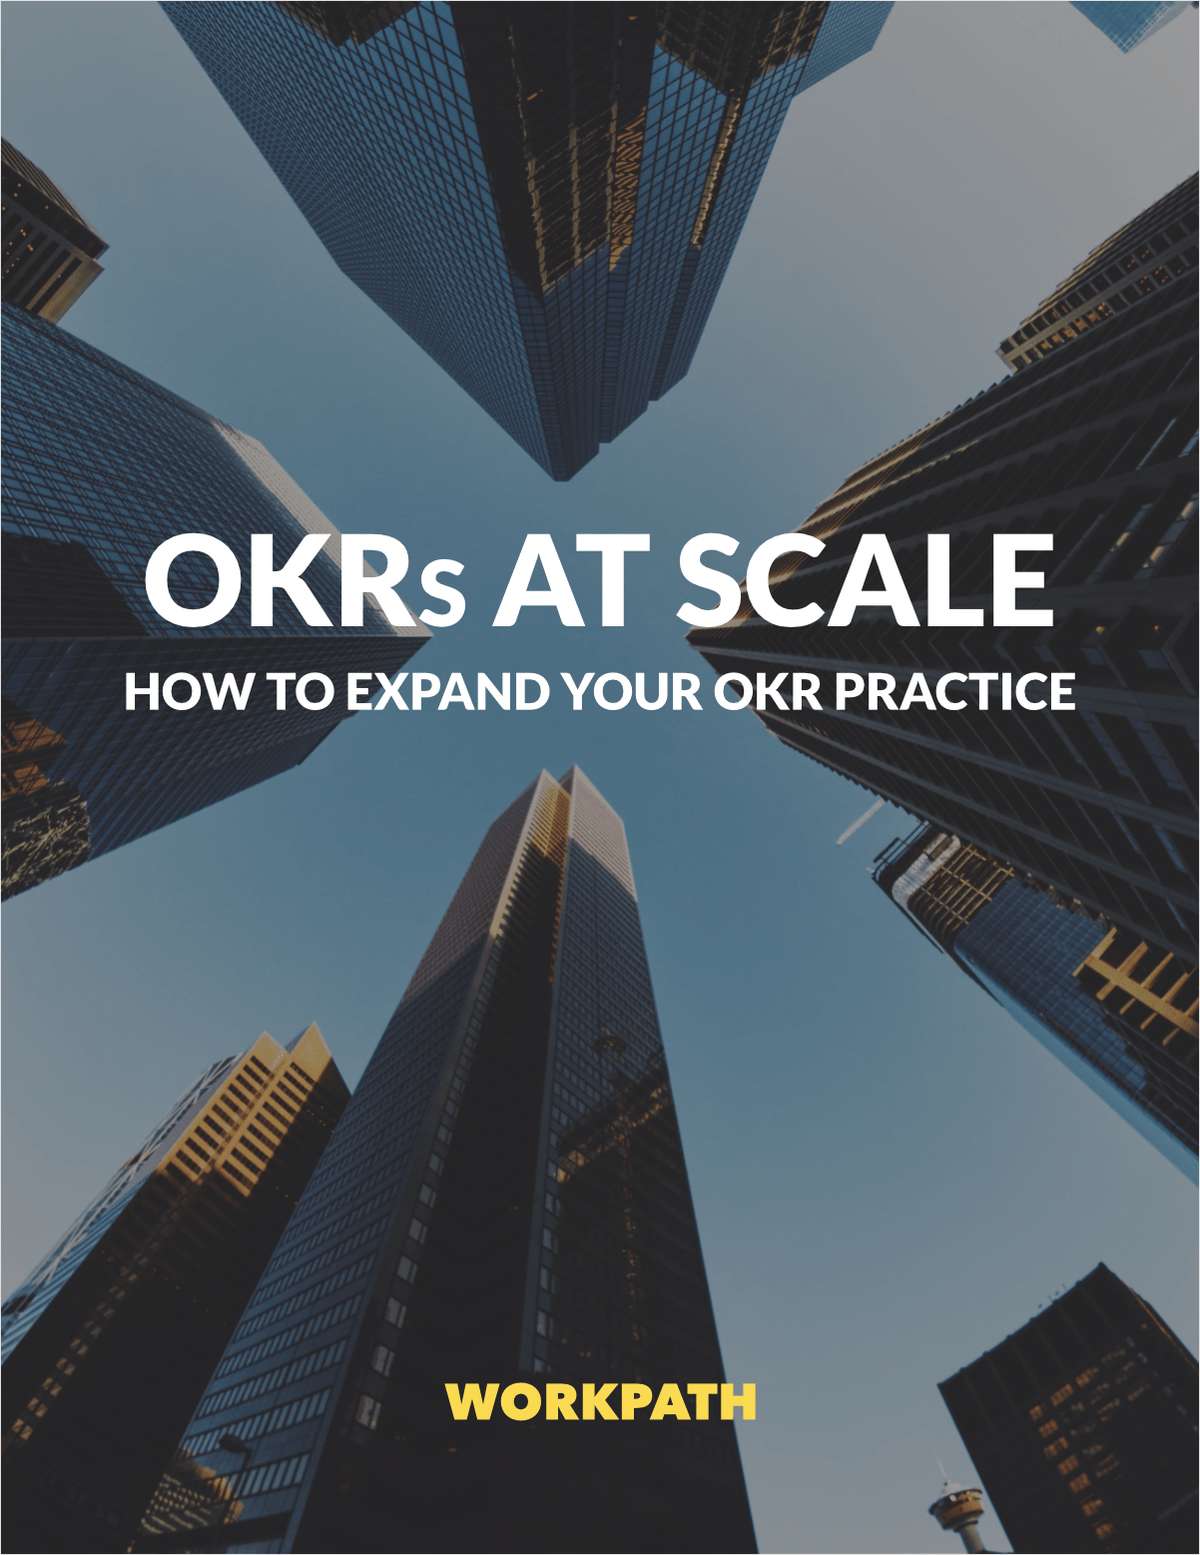 OKRs at Scale: Achieving Enterprise Agility